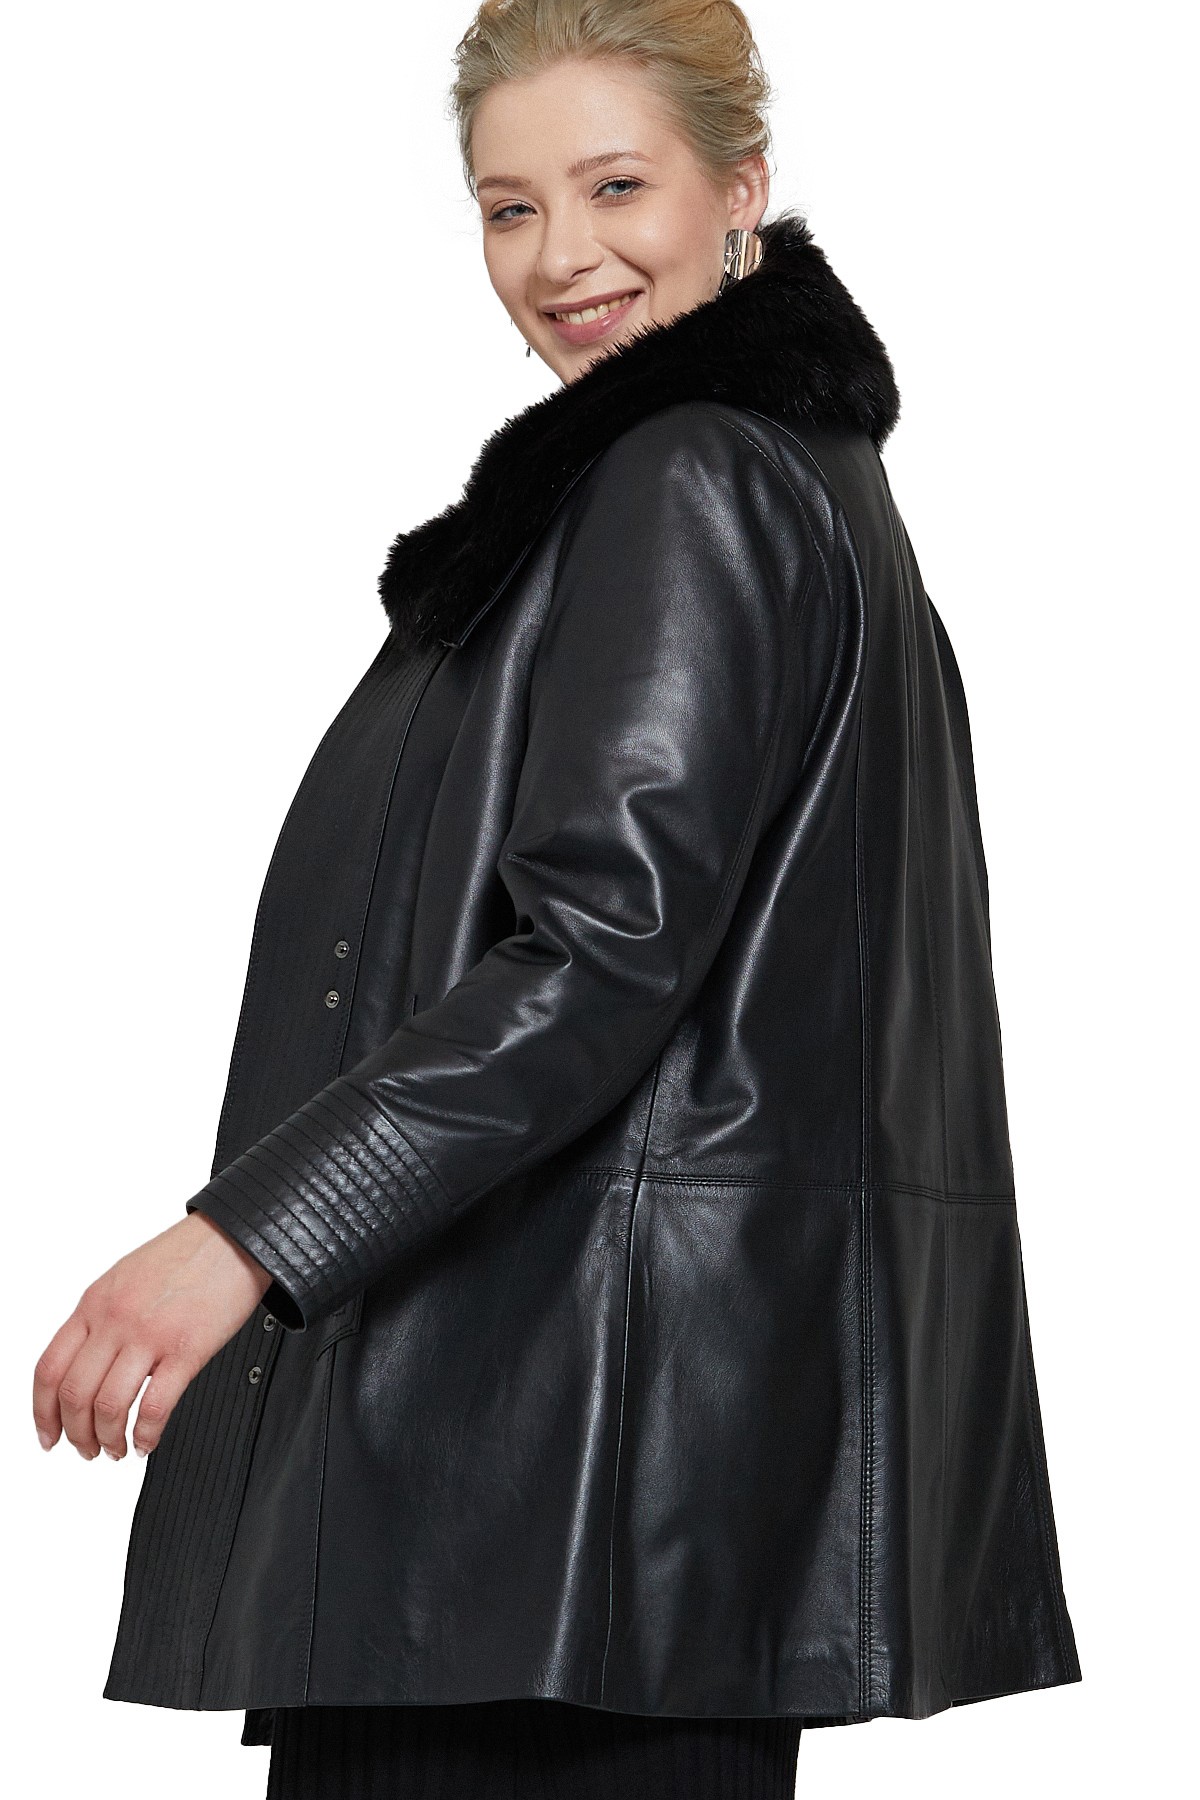 Mayfair Women's 100% Real Black Leather Fur Collar Coat